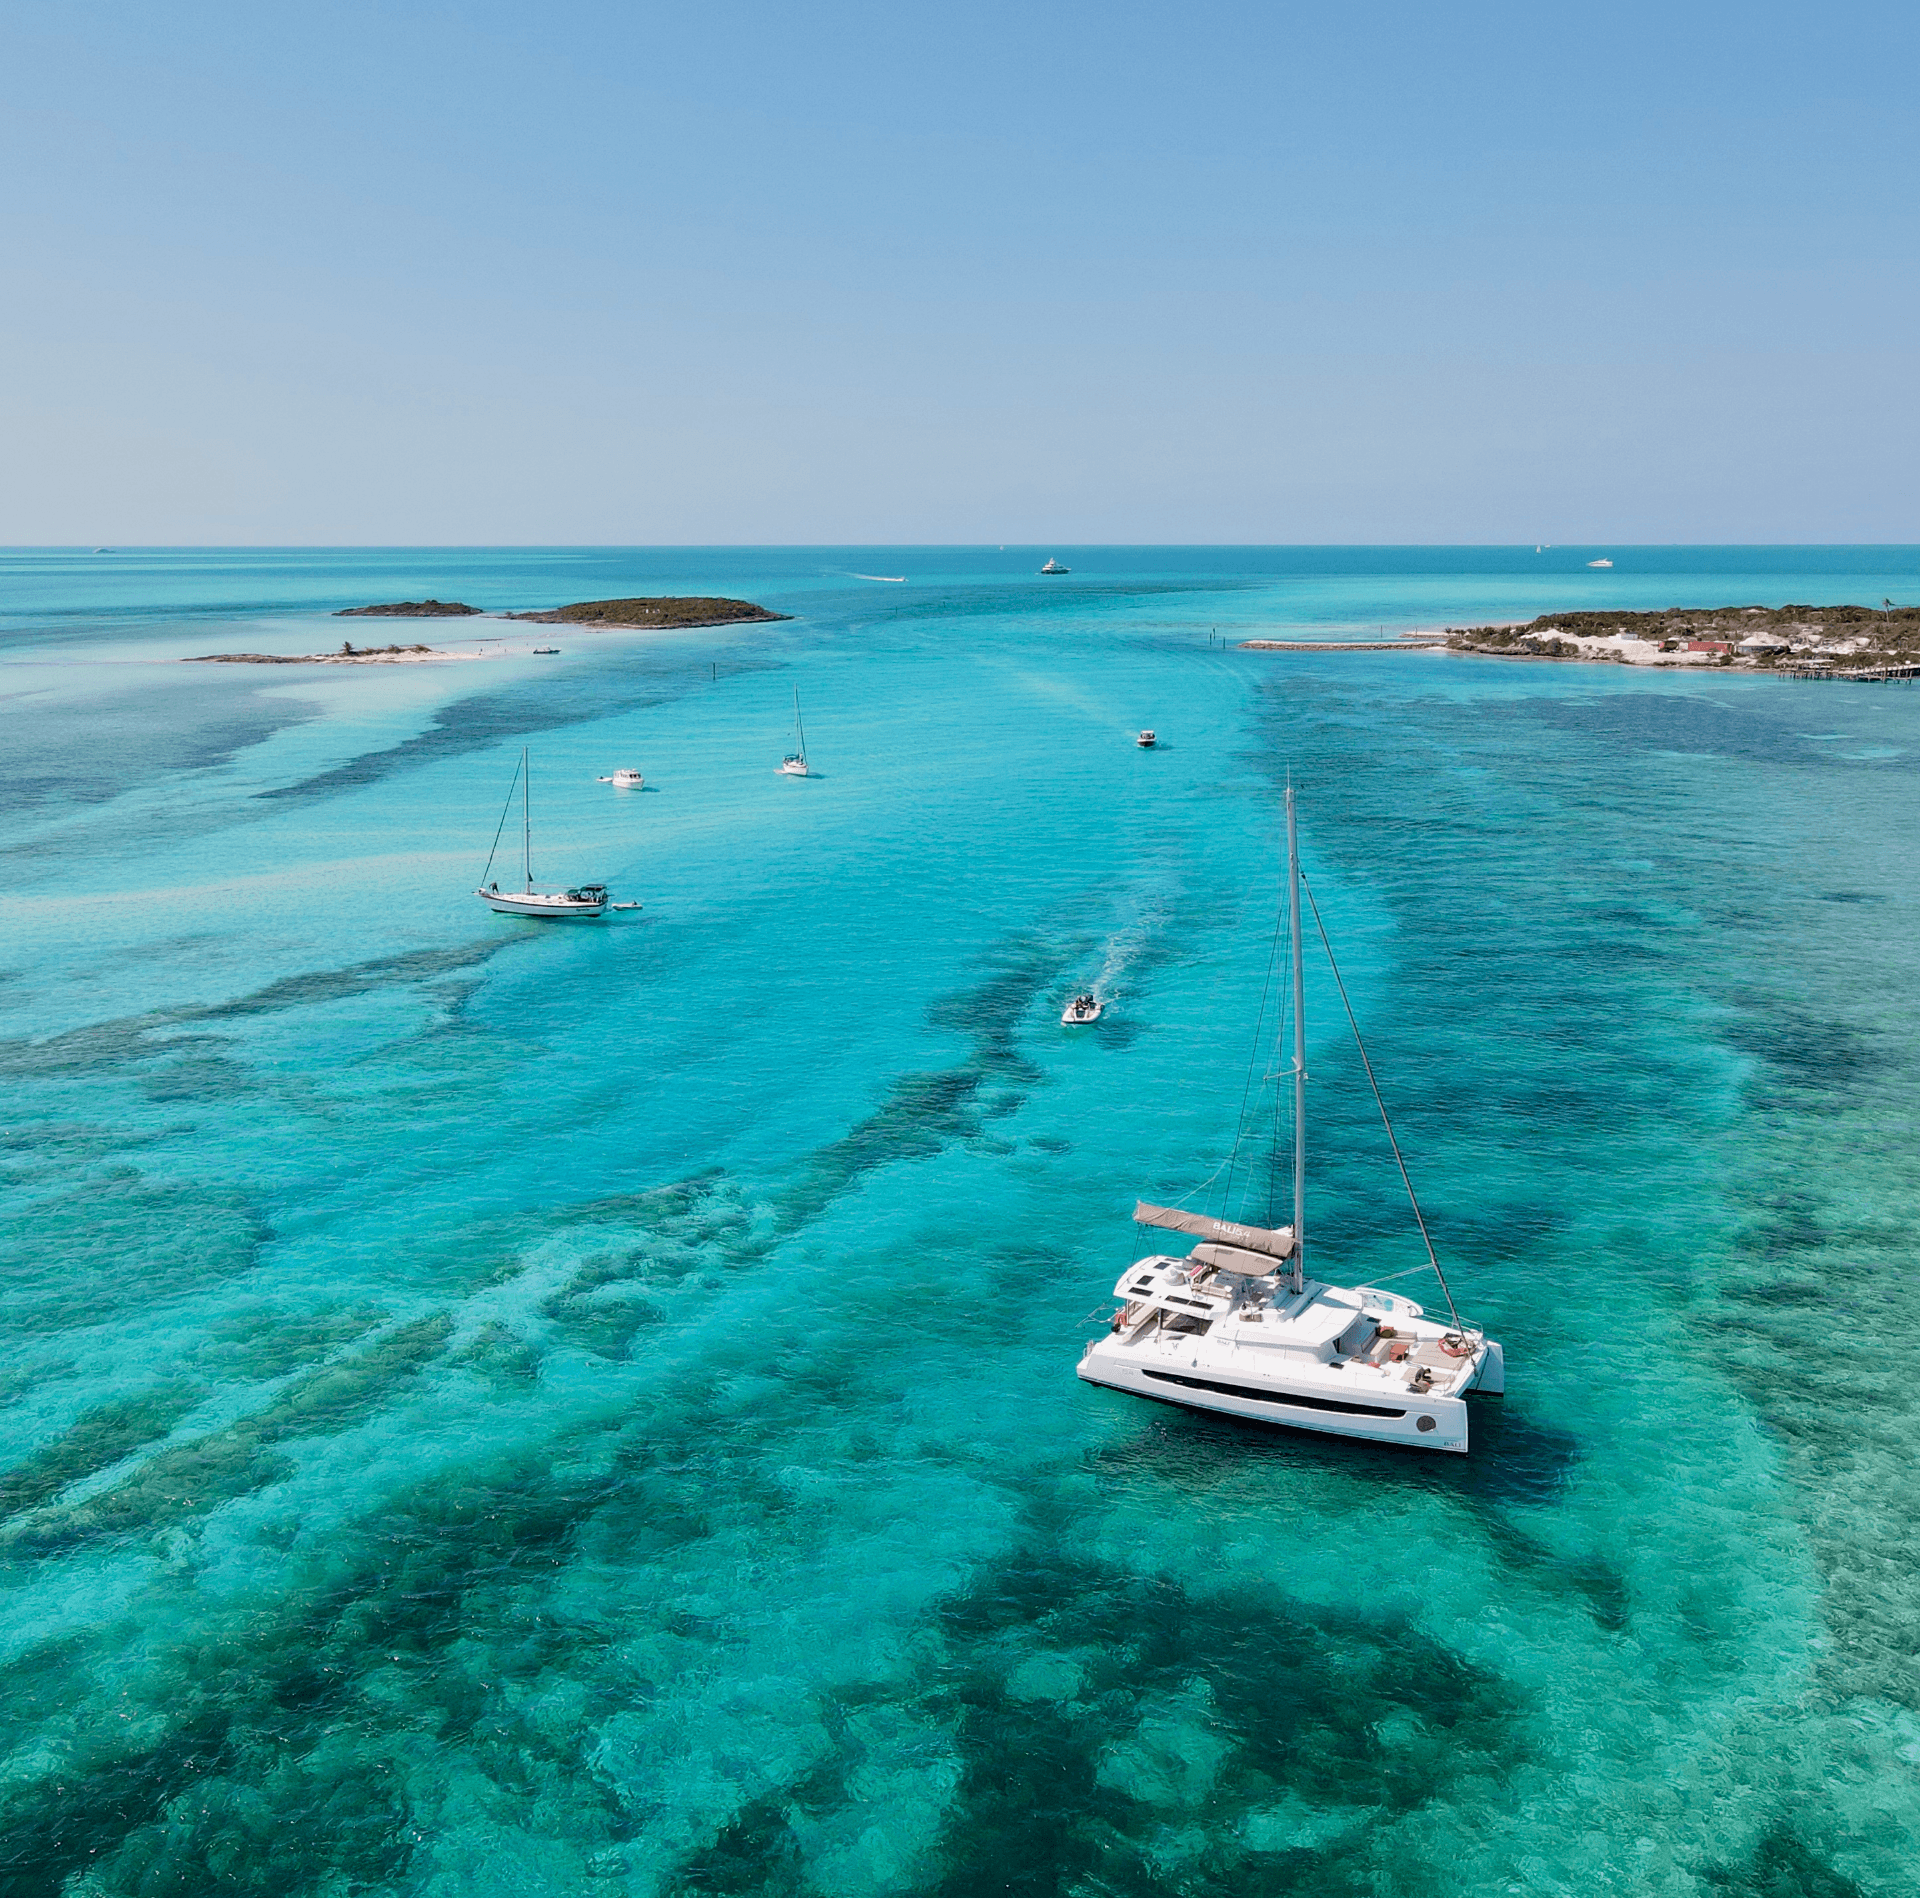 The water of Bahamas island